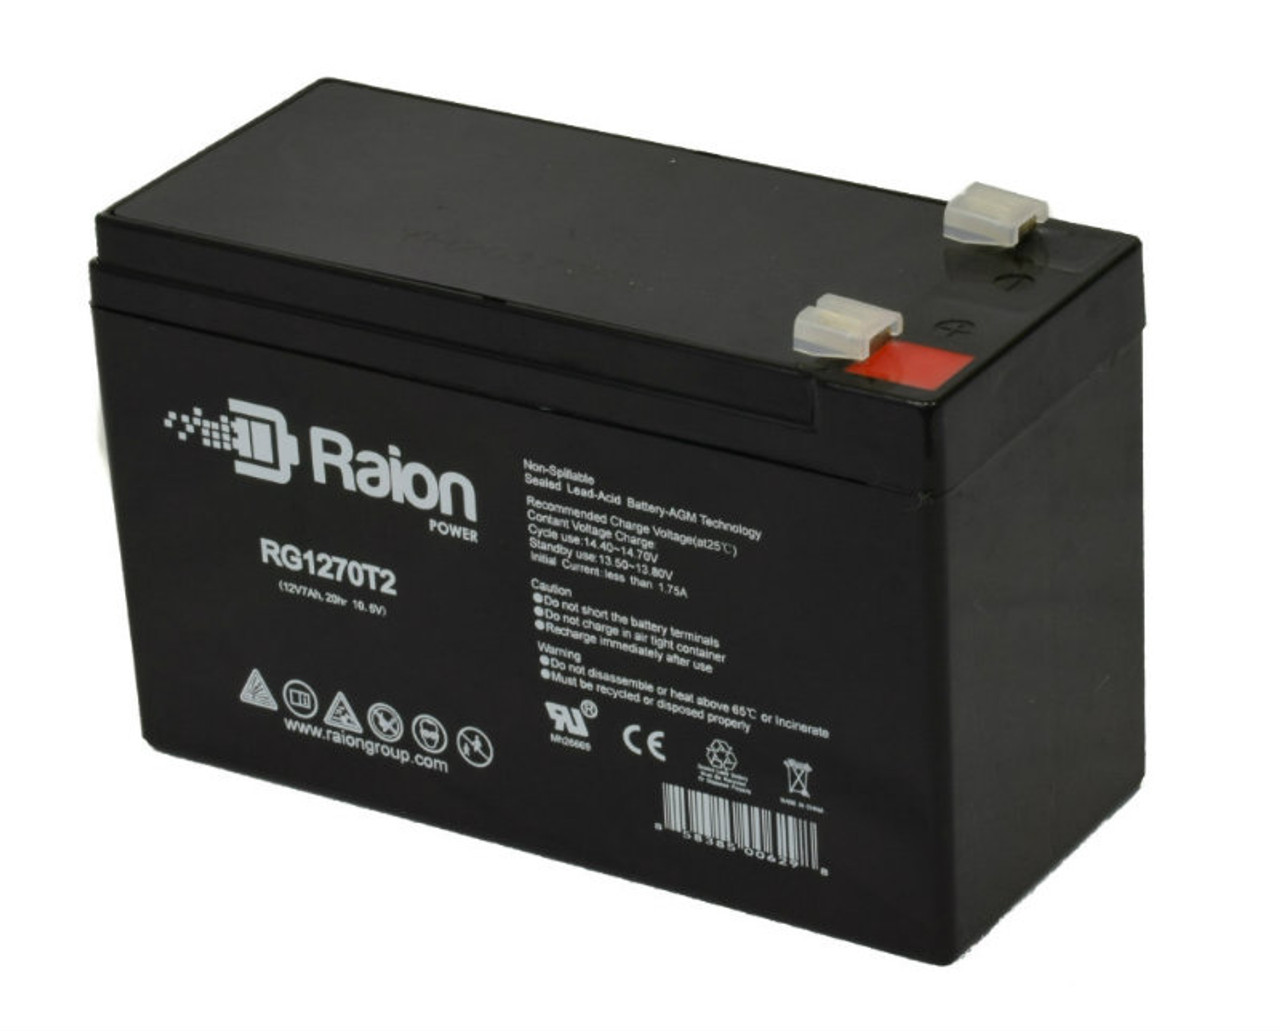 Raion Power RG1270T2 12V 7Ah Lead Acid Battery for eZip E-4.5